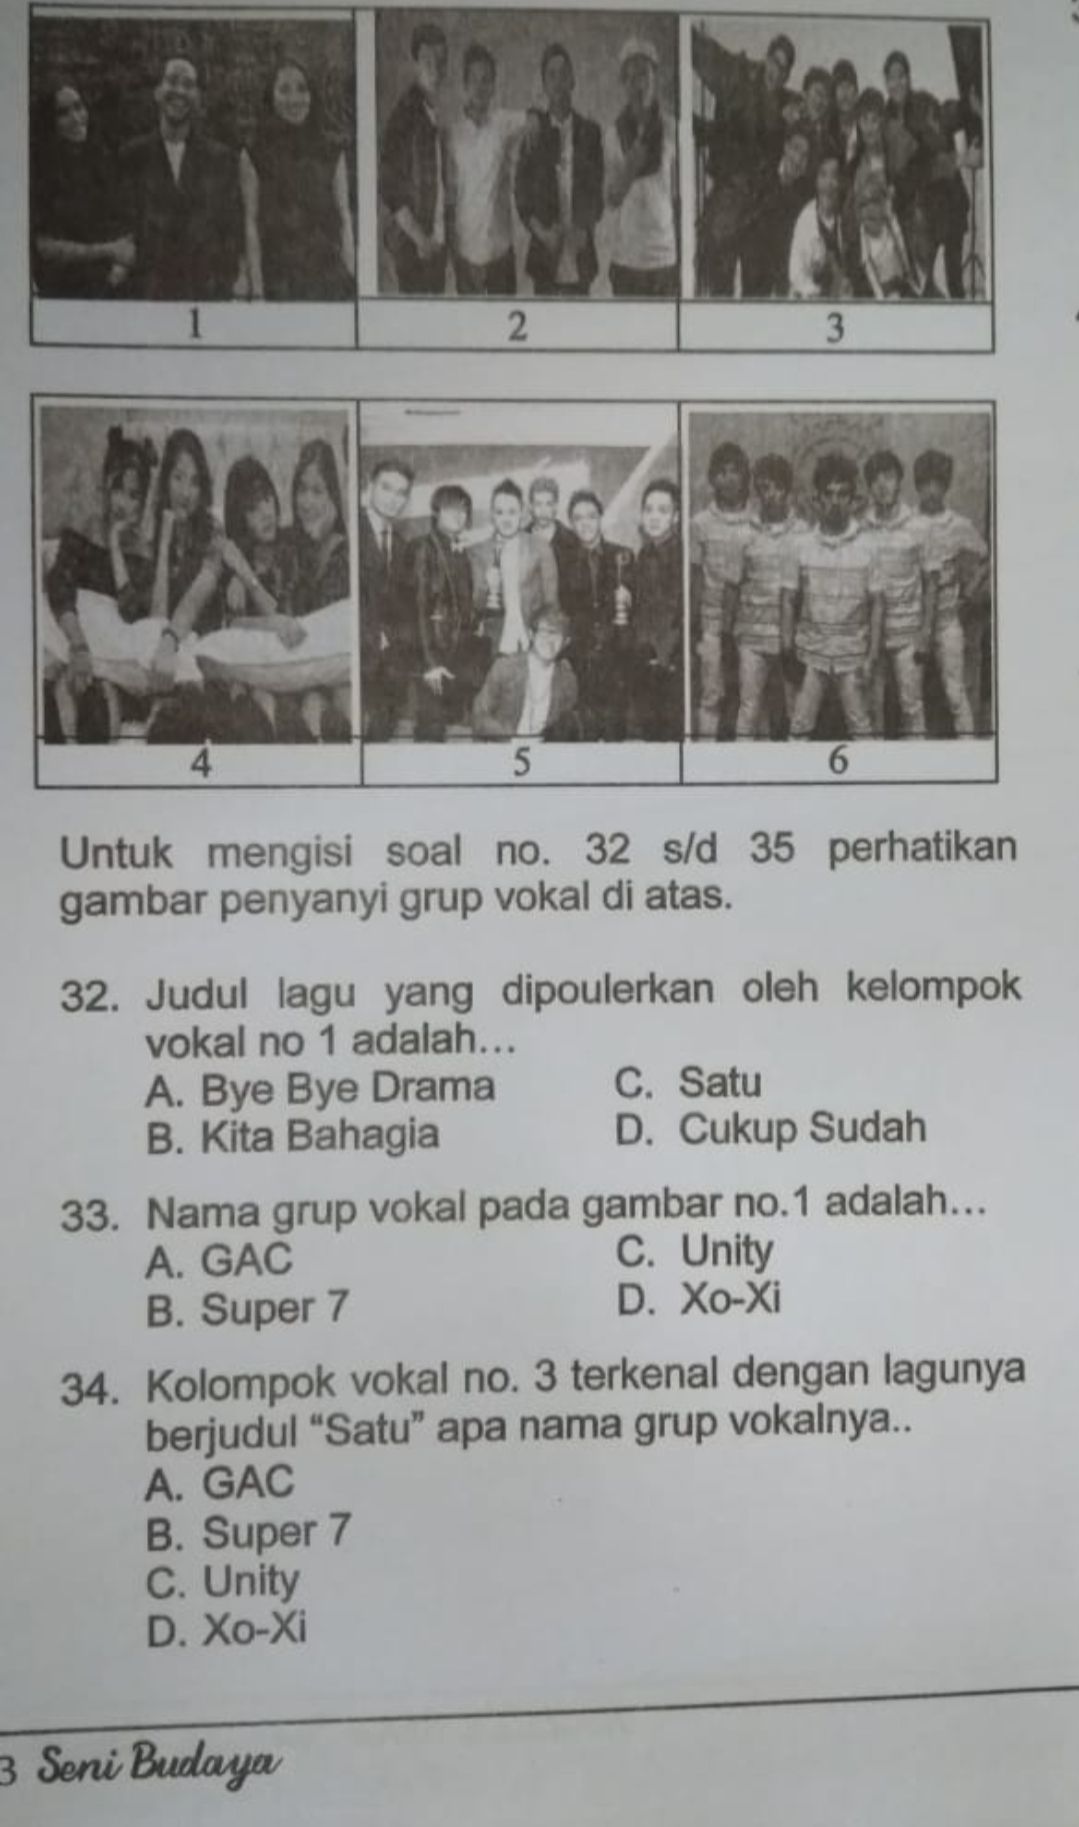 Grup musik dan boyband maupun girlband jadi soal ujian SMP swasta di Kota Serang